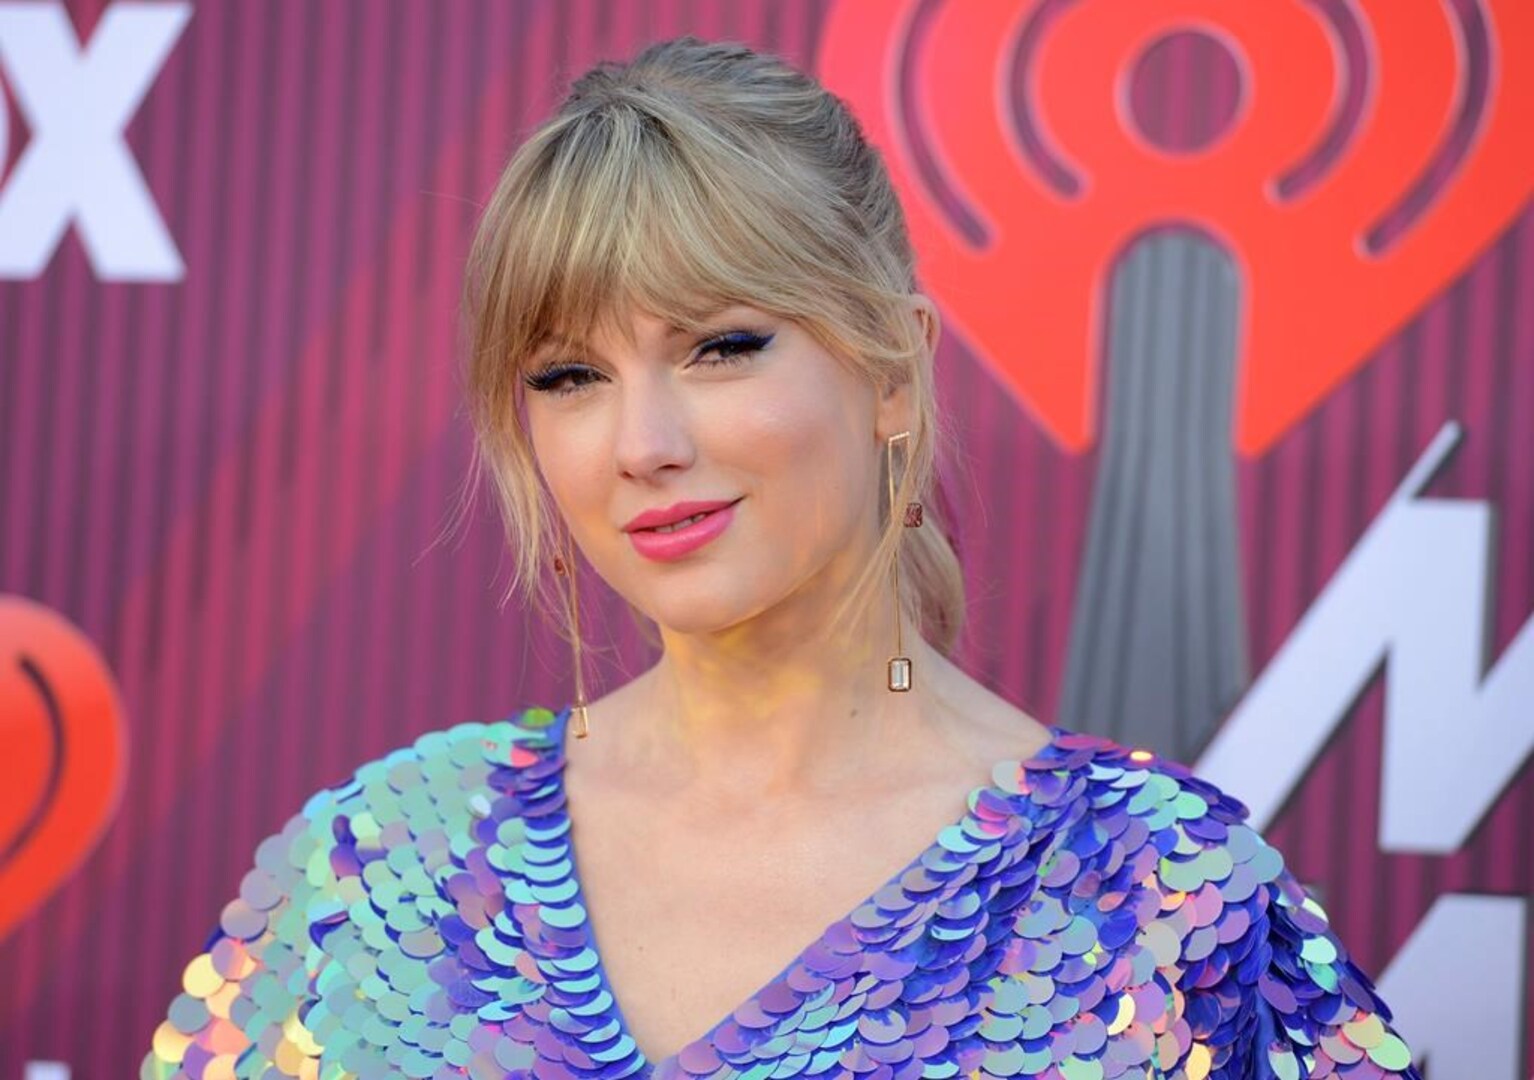 Business Report: New Swift album already setting records